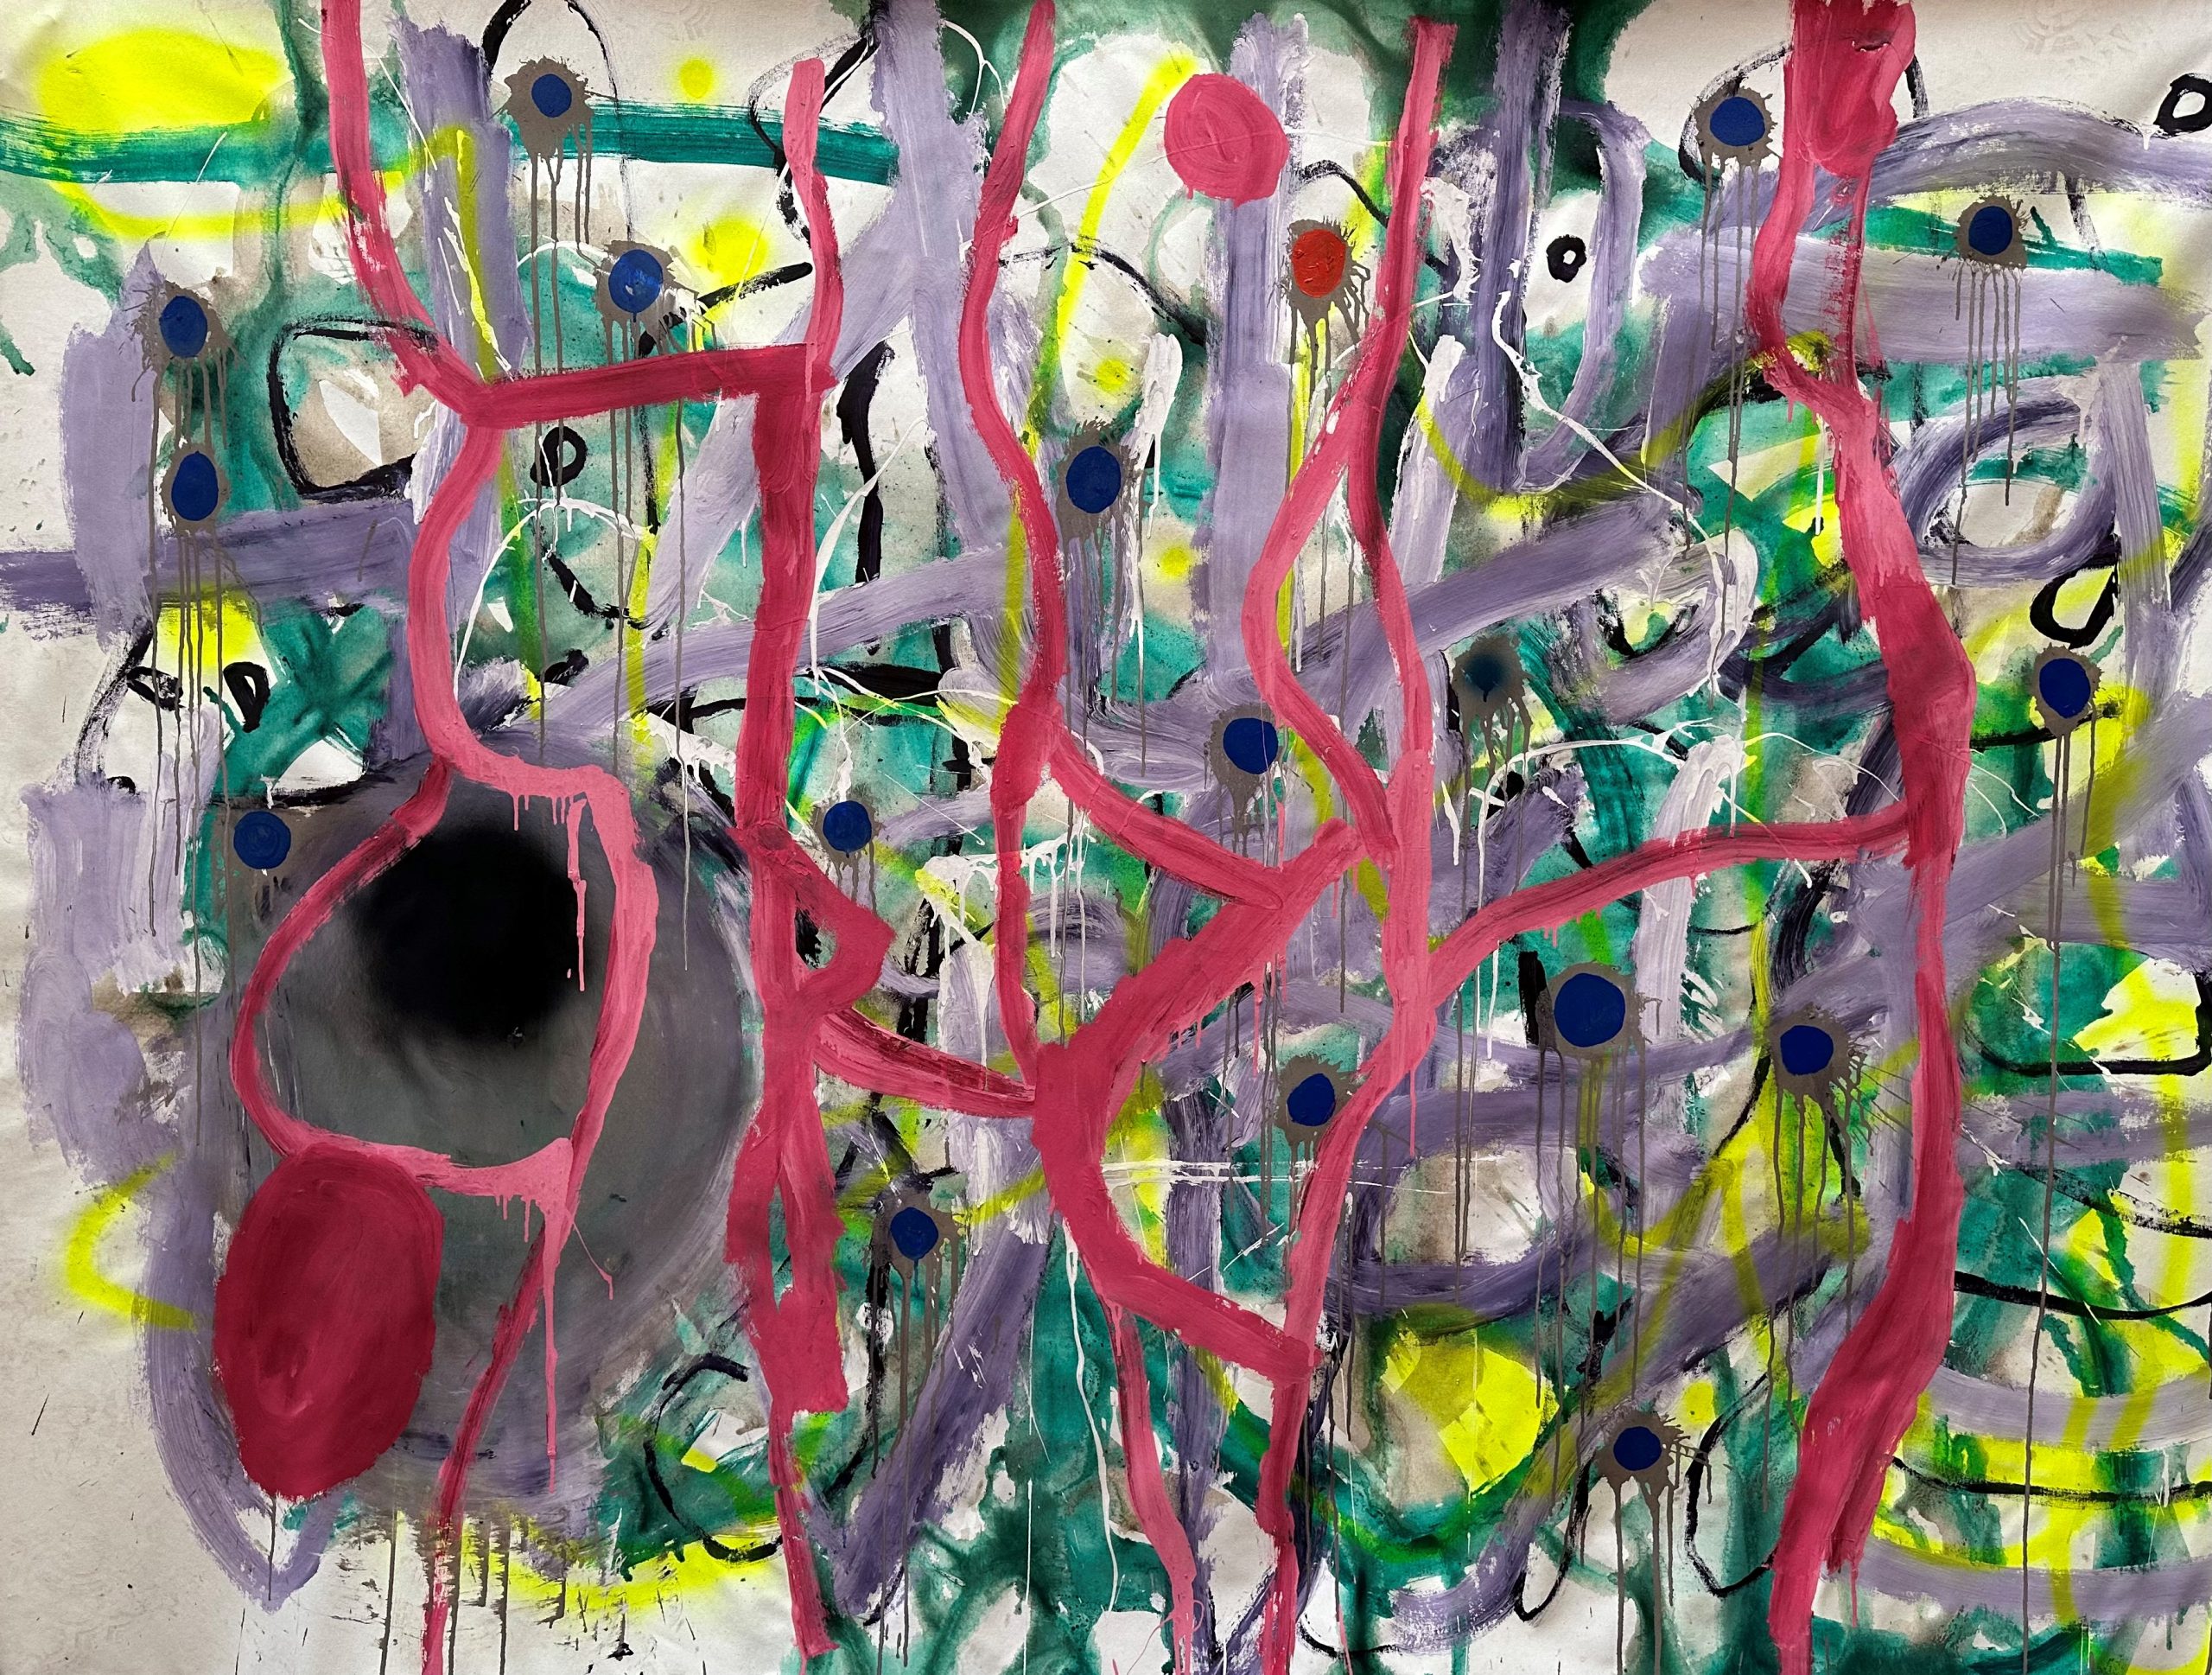 Al Poulet 'Saplings' acrylic and spray paint on canvas 173 x 236cm $15,500